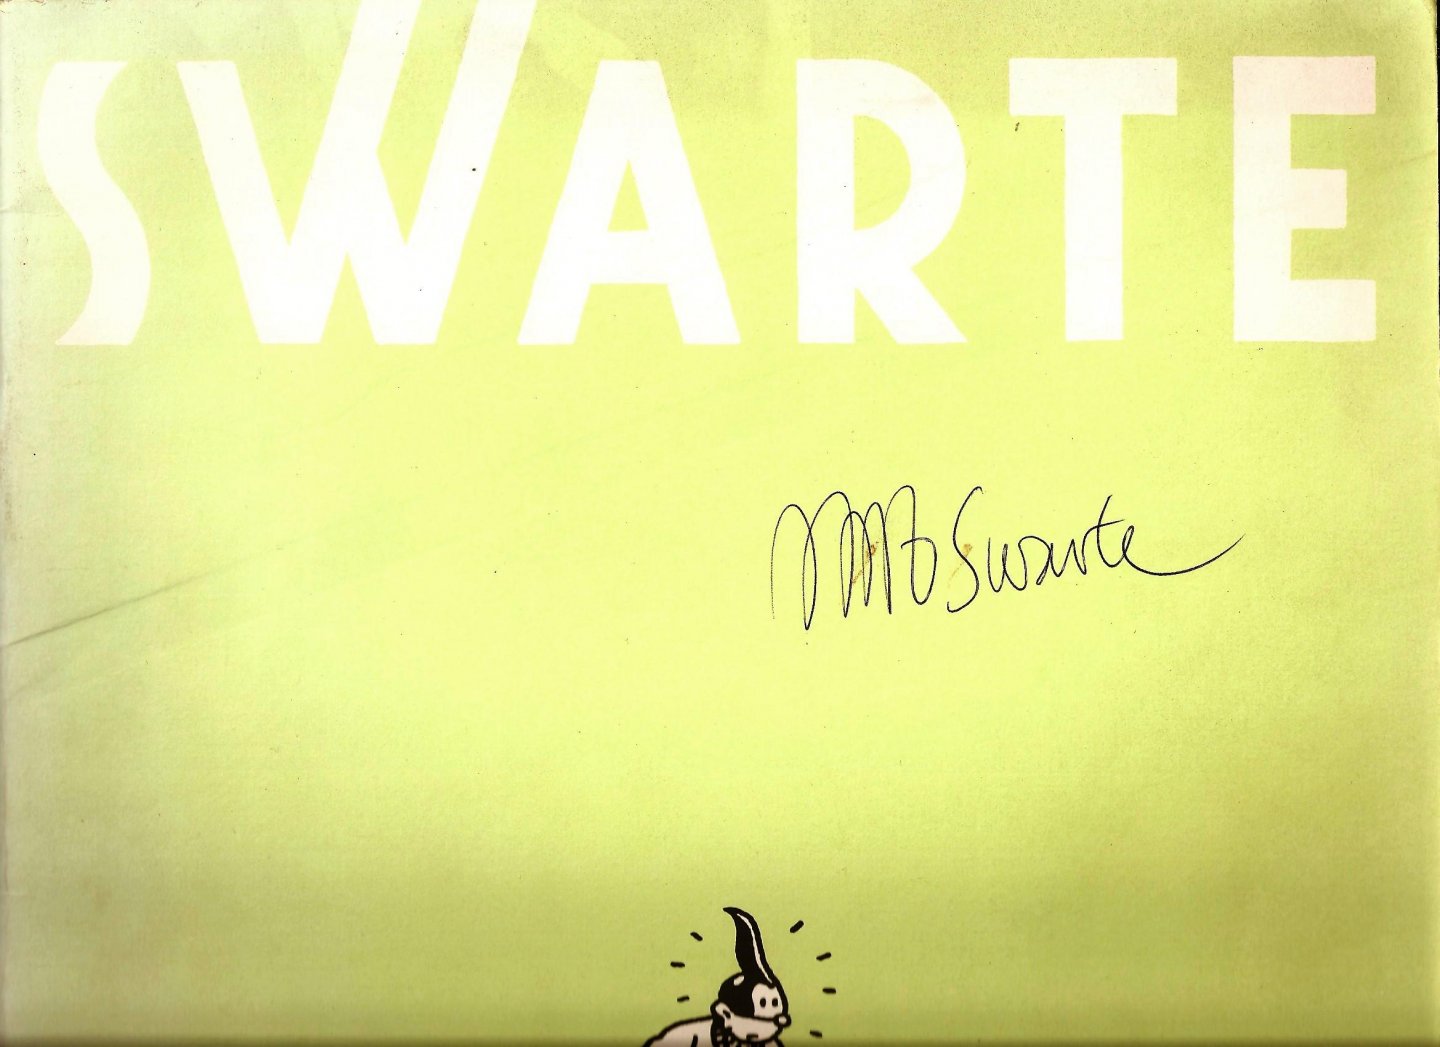 Swarte, Joost - album cover signed by Joost Swarte - Swarte -  Jopo de Pojo op omslag vd Franse album met handtekening Joost Swarte